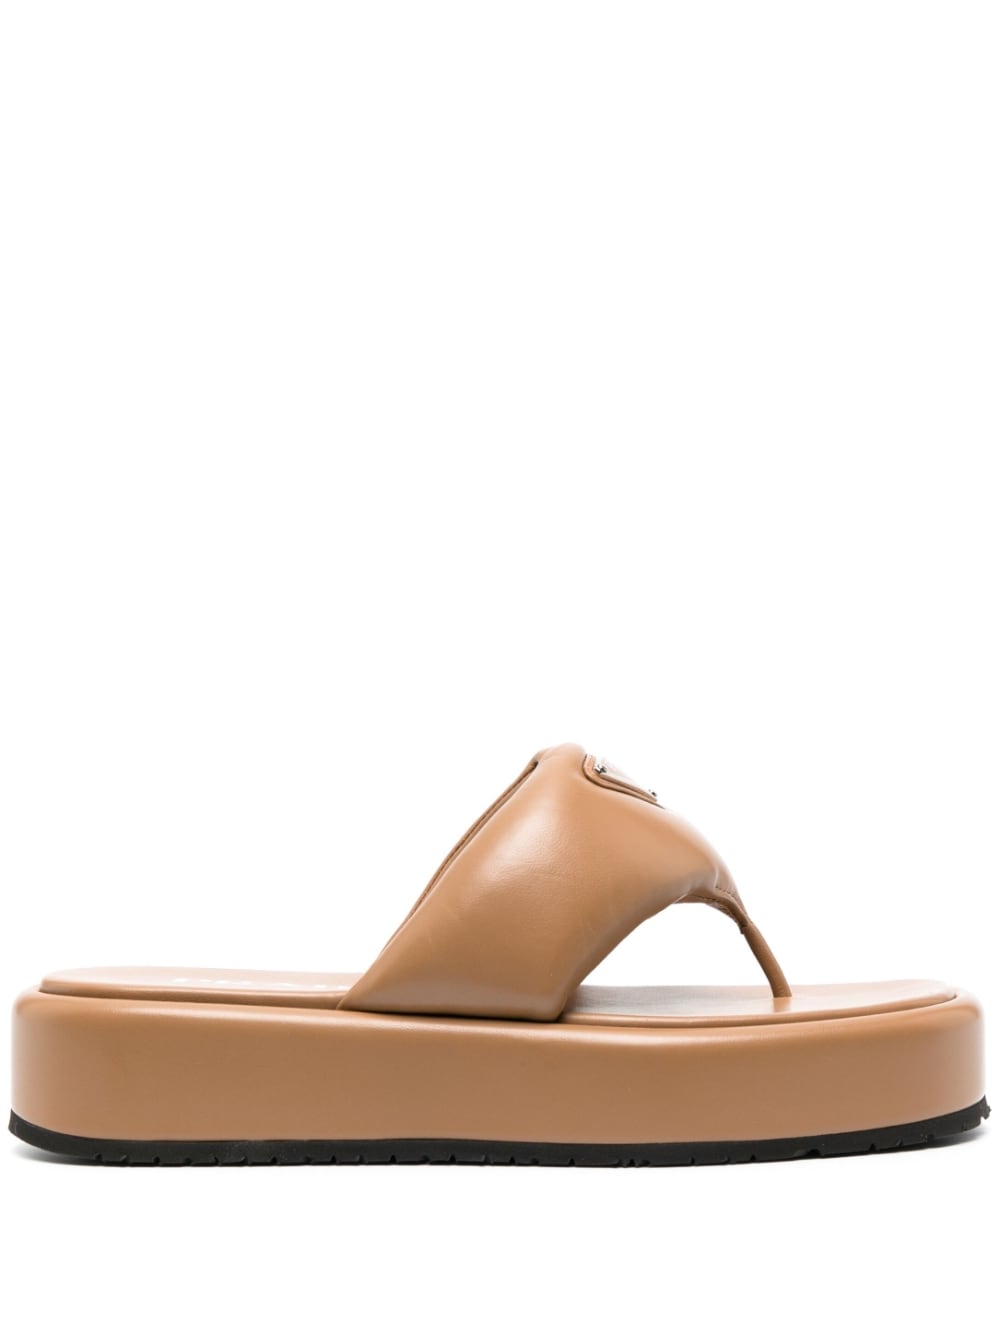 Prada Soft padded nappa leather sandals - Brown